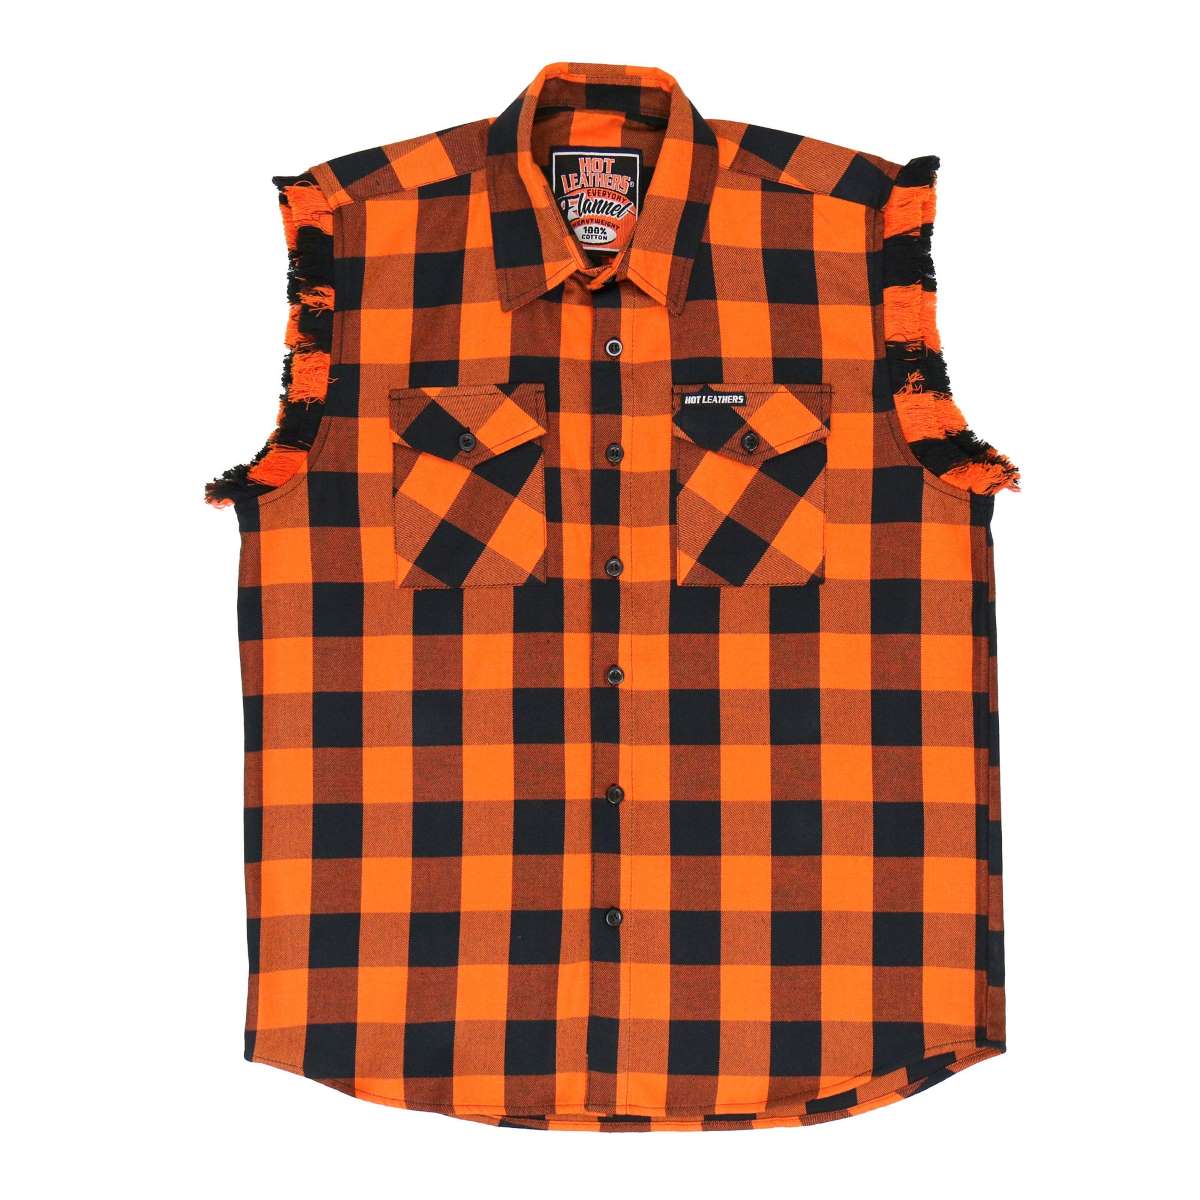 Hot Leathers FLM5210 Men's No Sleeve Fringe Orange and Black Flannel Shirt